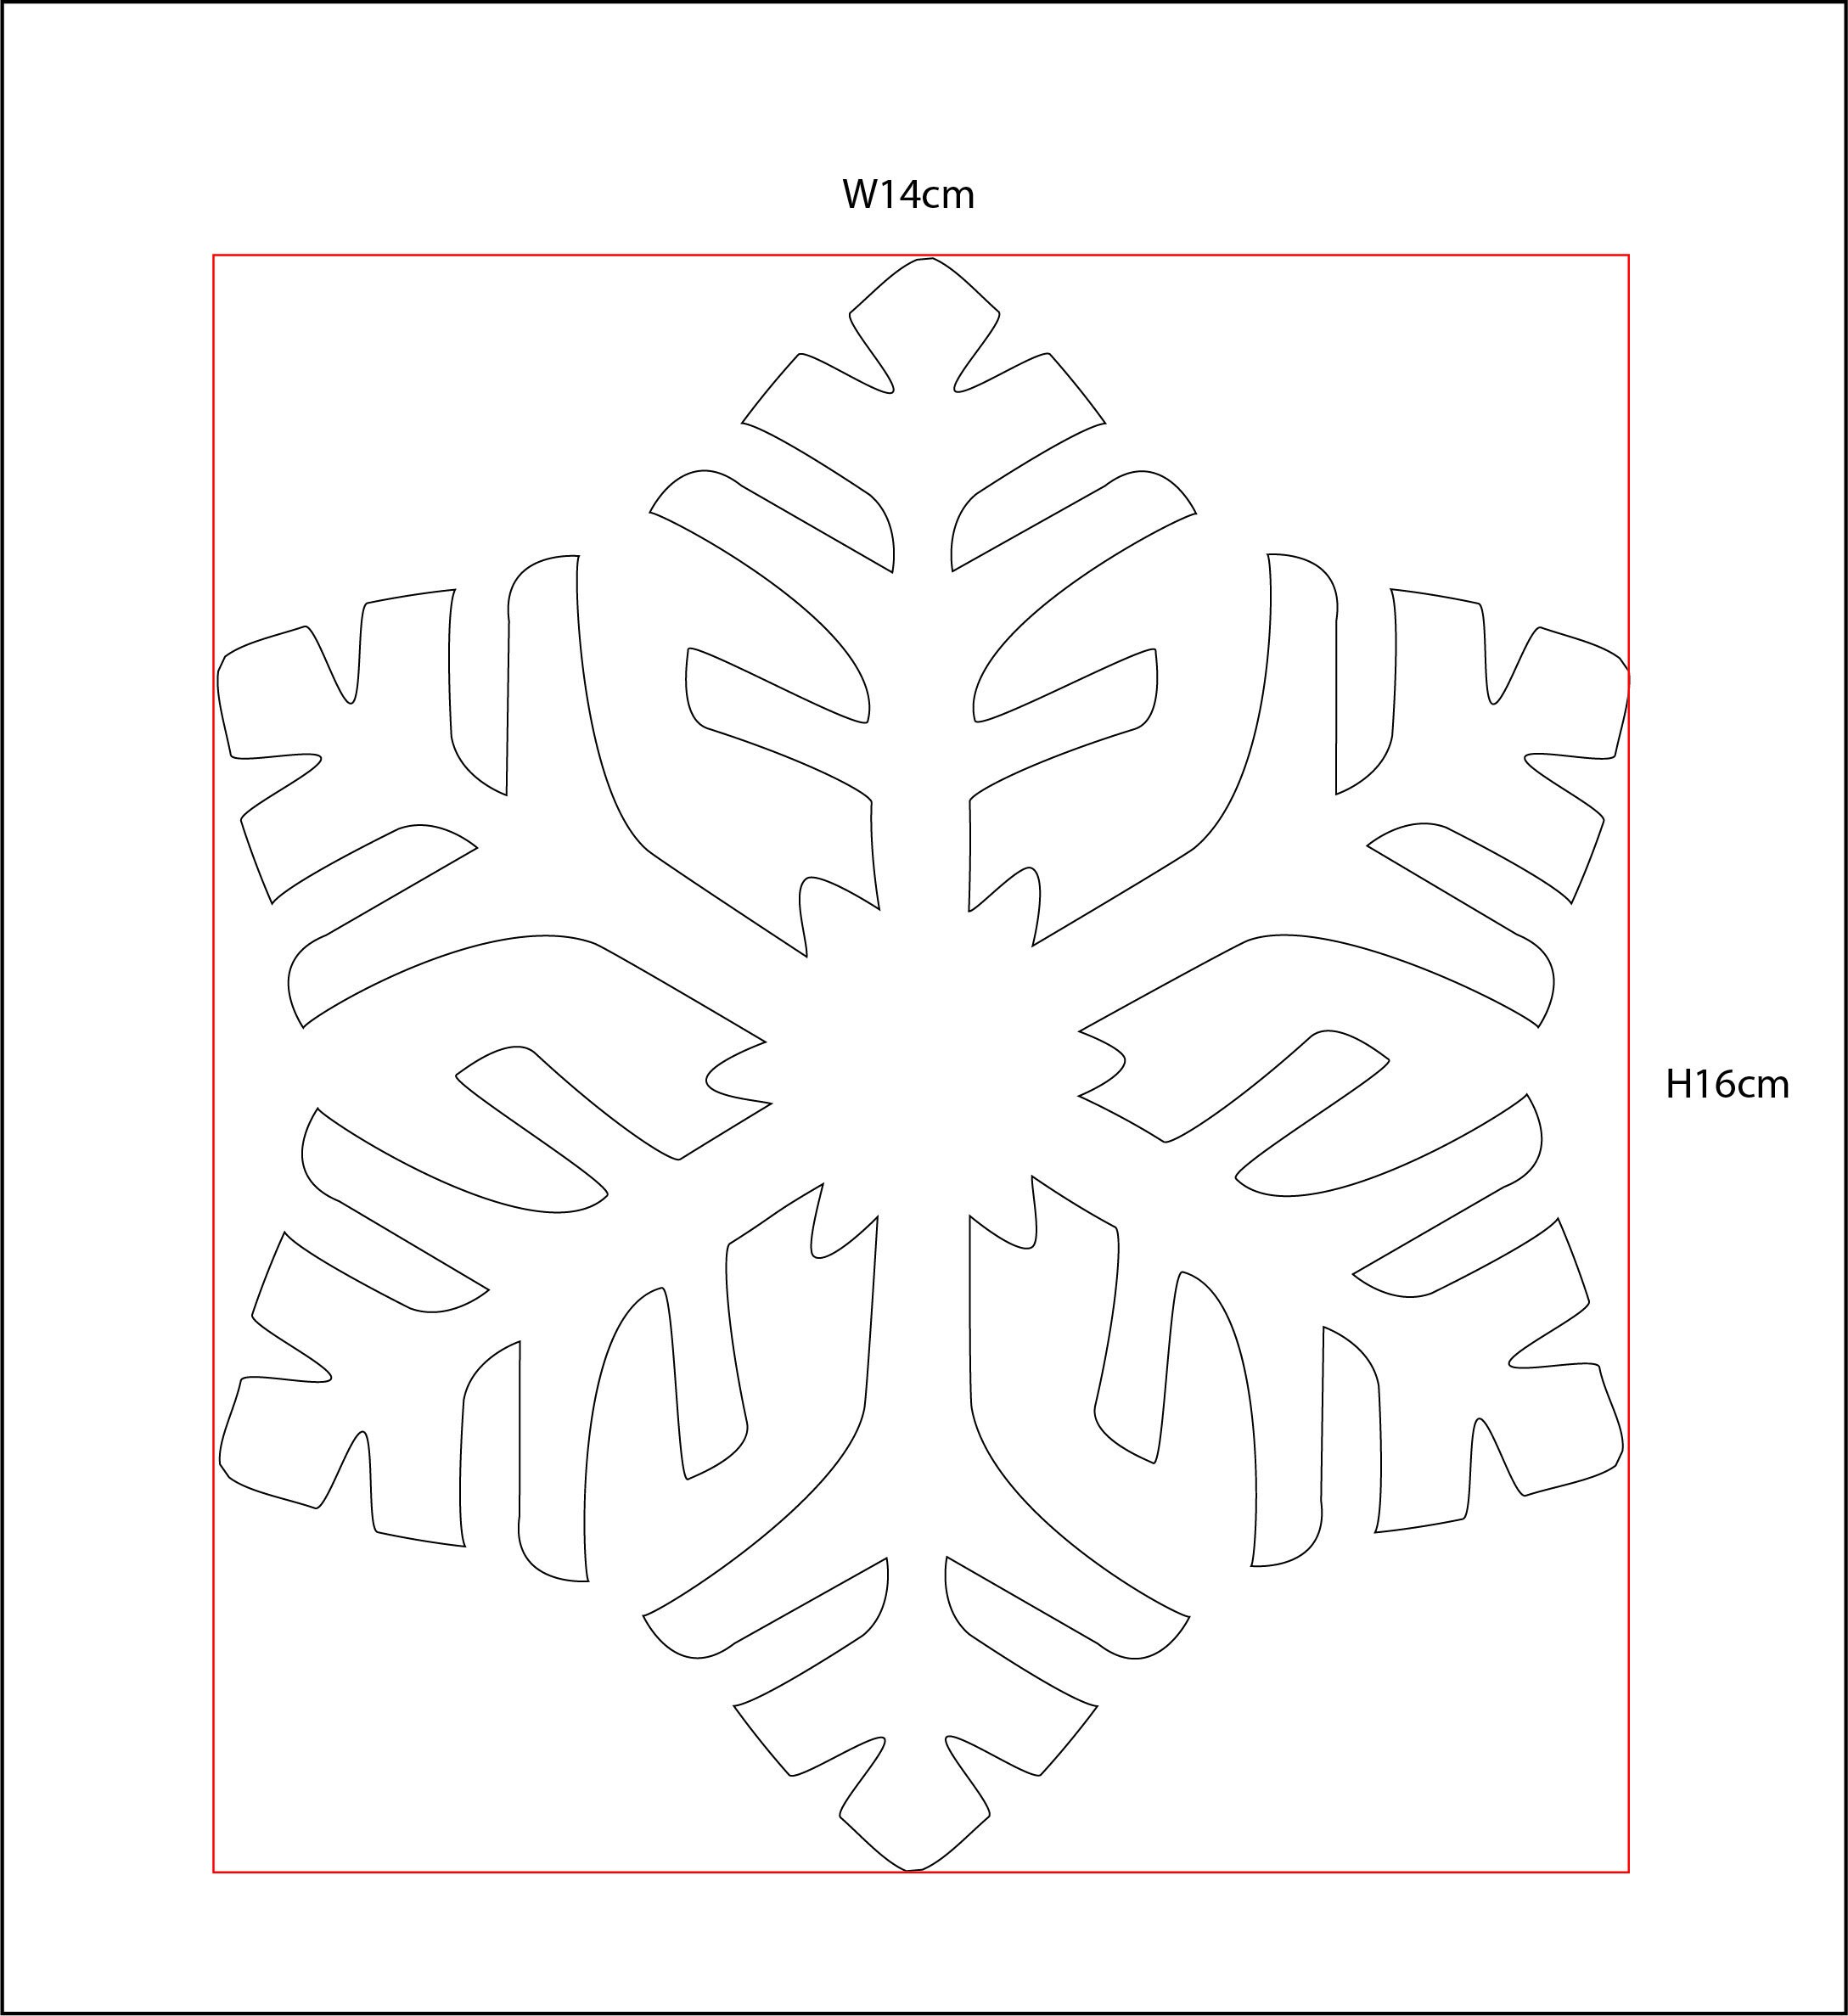 Plastic Reusable Window Christmas Stencil for Artificial Snow // SNOWFLAKES  BORDER #2